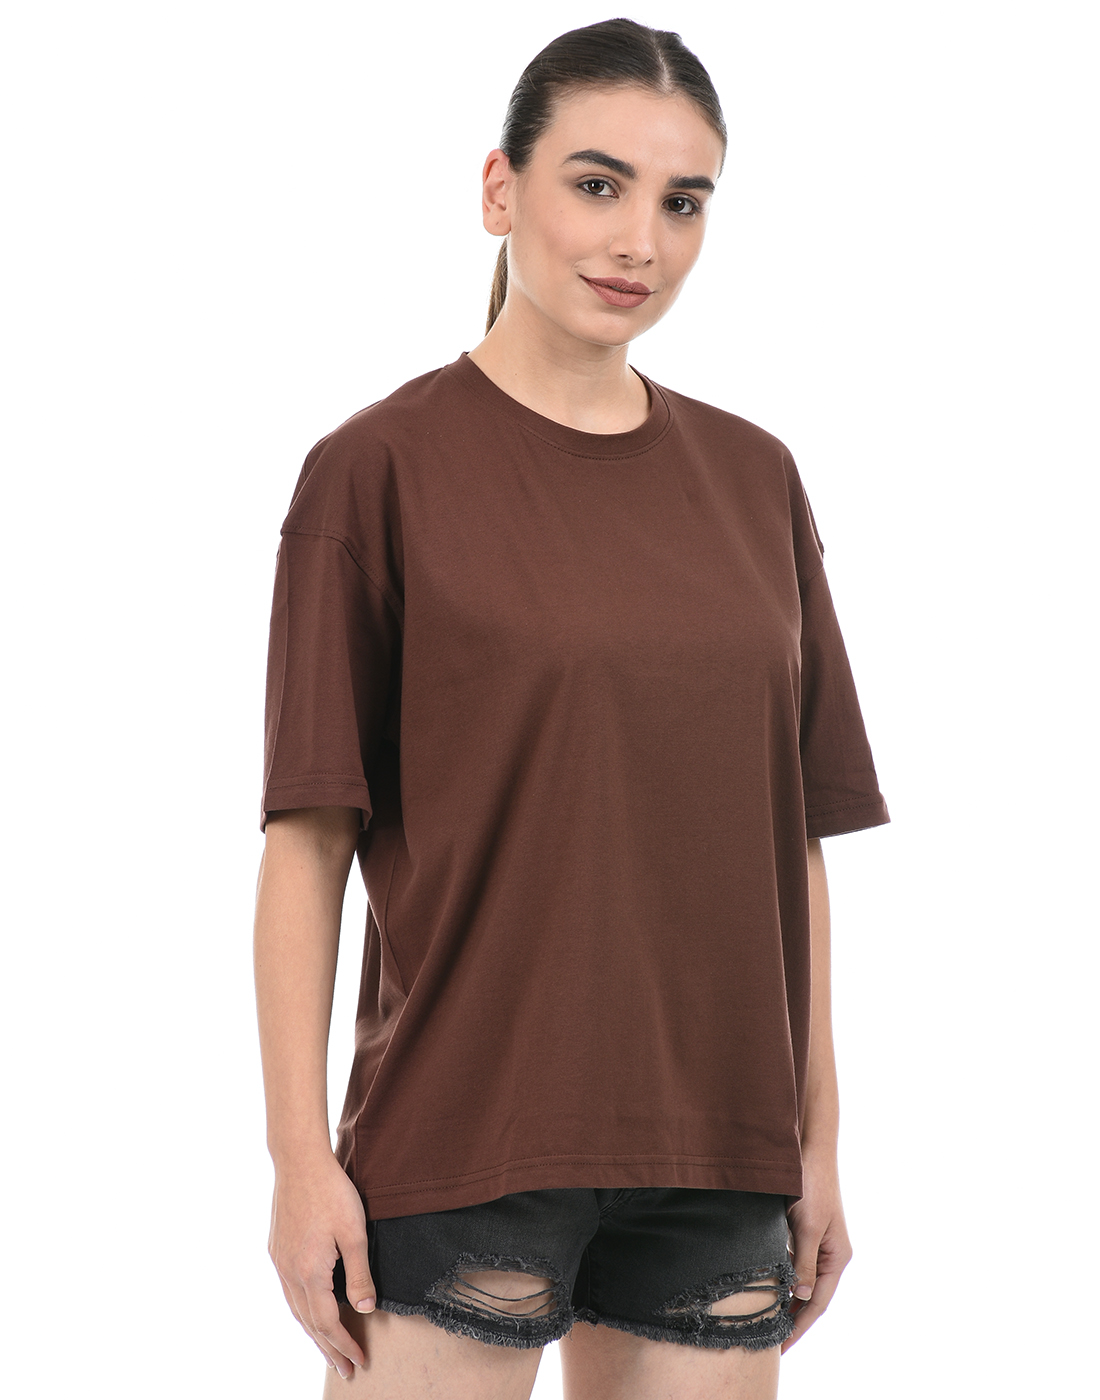 Oneway Unisex Solid Brown T-Shirt